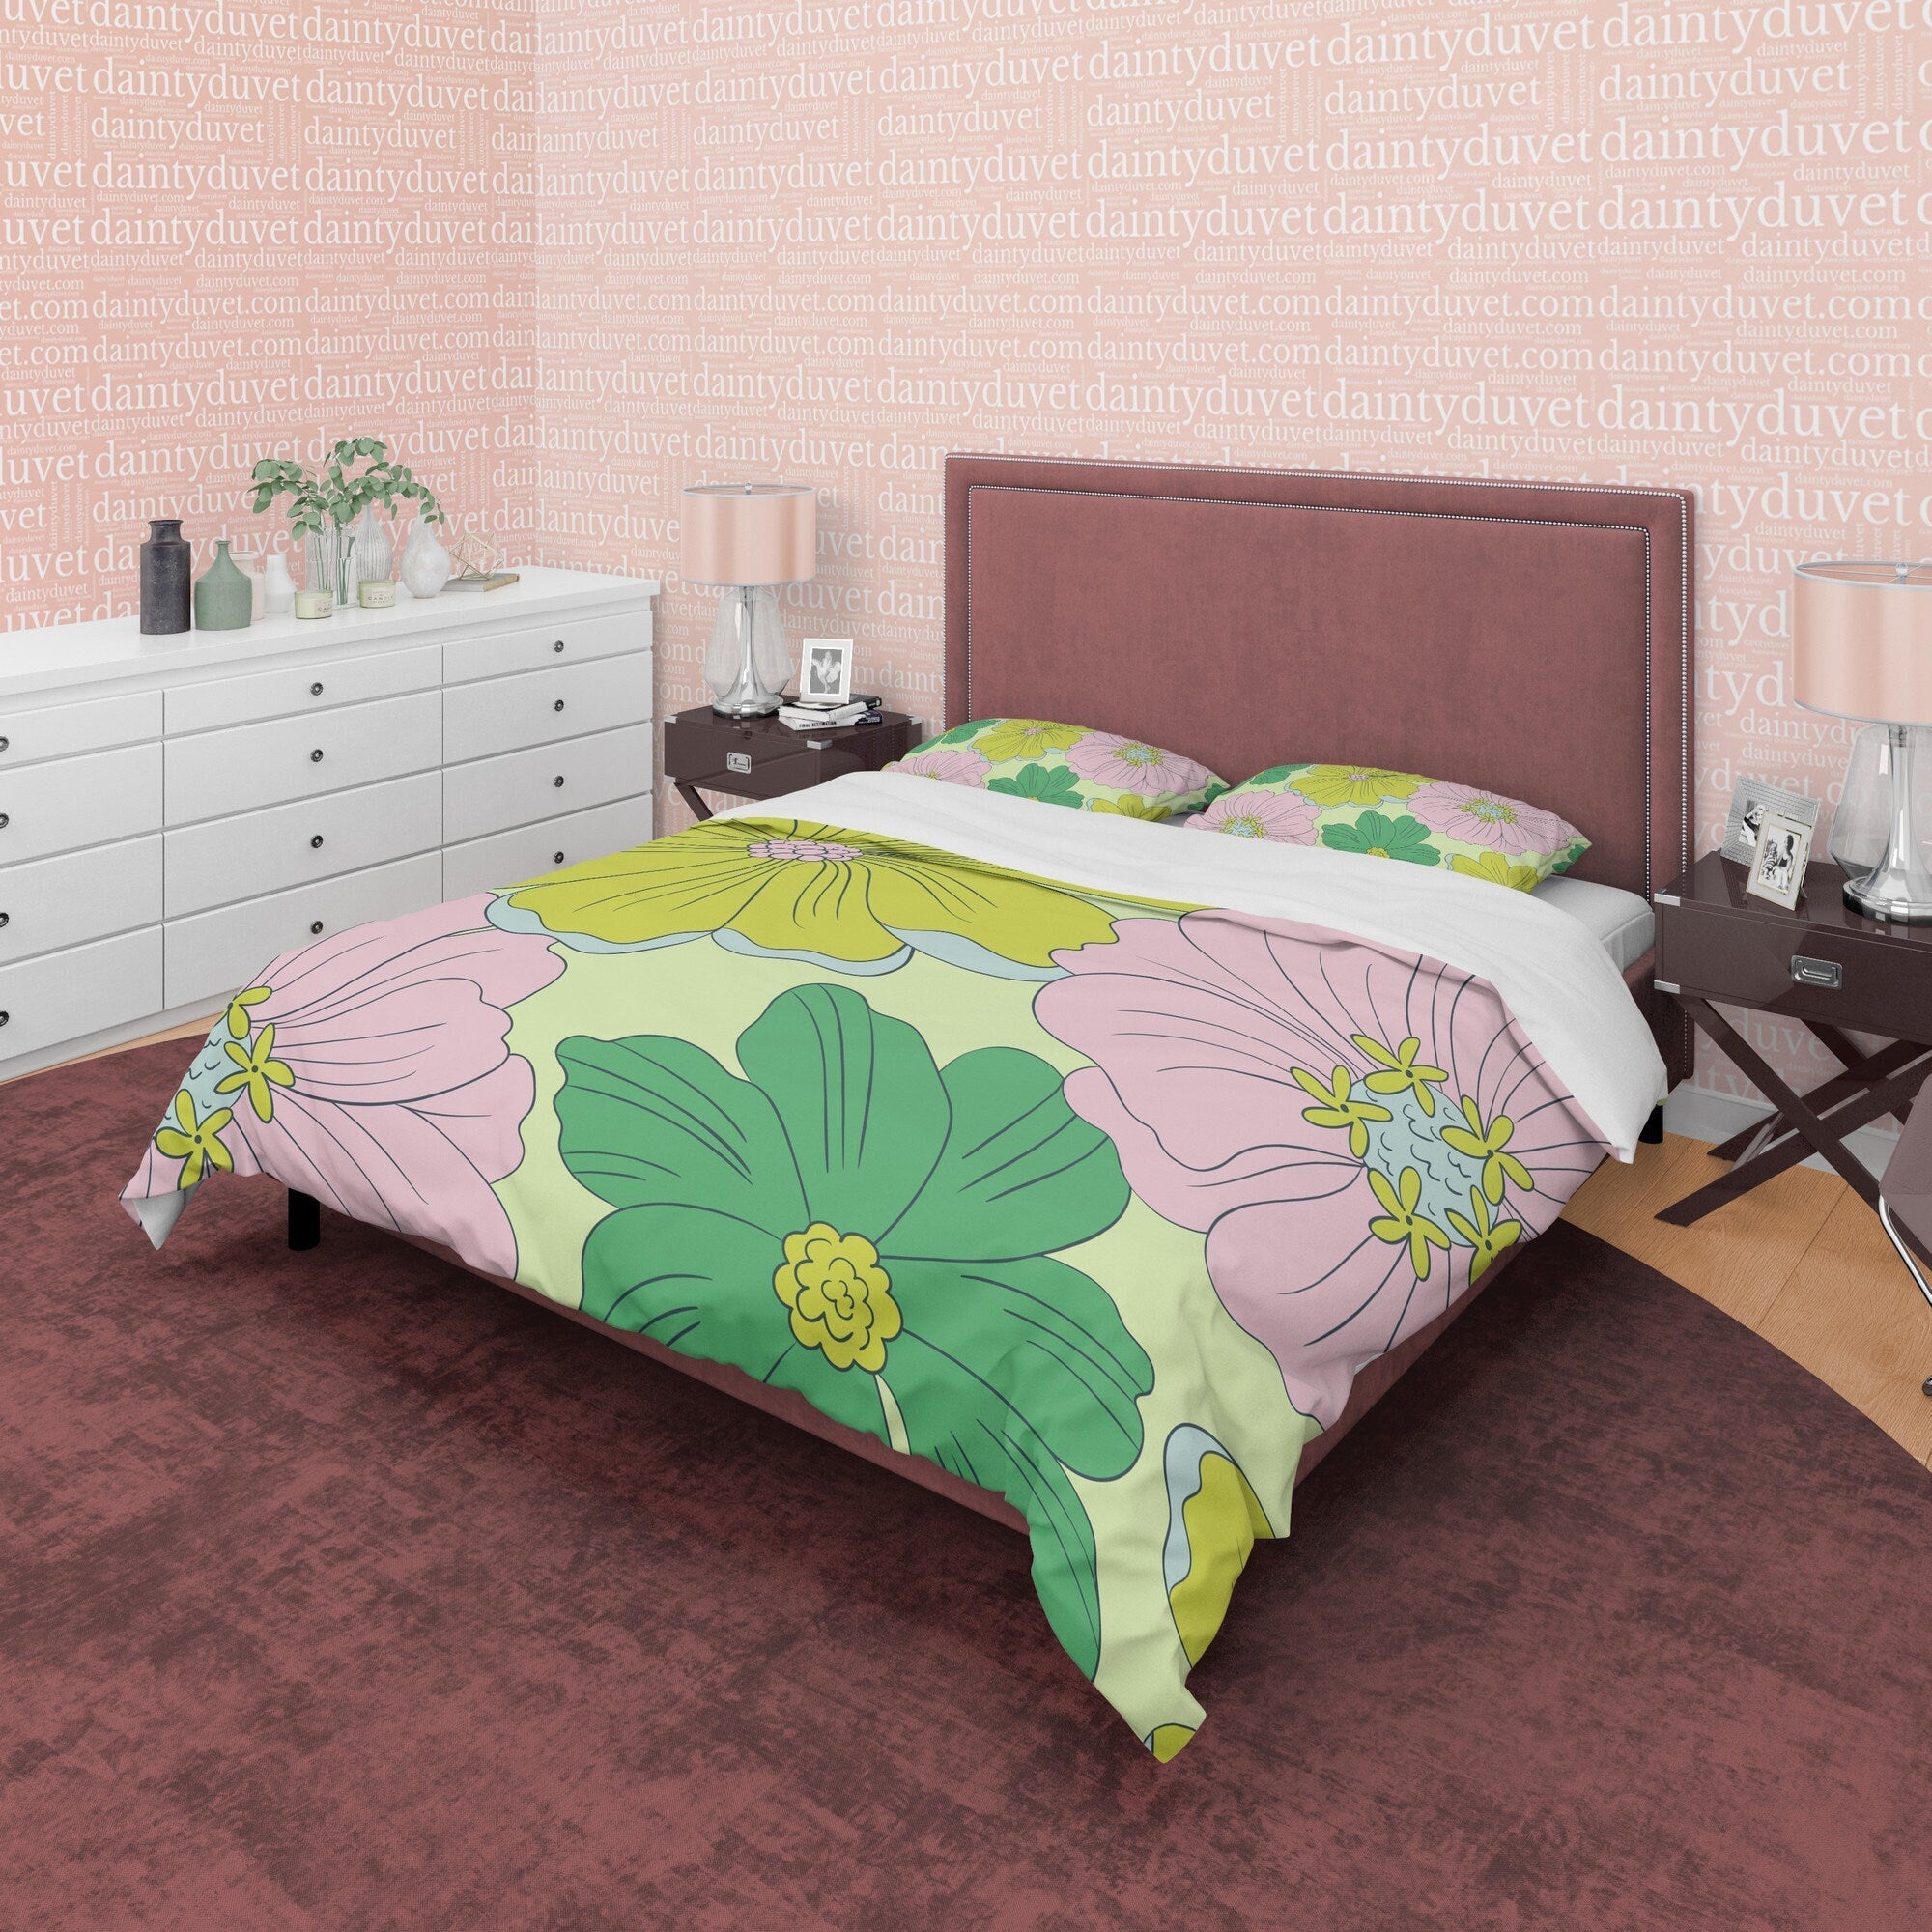 Boho Bedding Colorful Duvet Cover Bohemian Bedroom Set, Green Pink Floral Quilt Cover, Aesthetic Bedspread, Bright Color Unique Room Decor